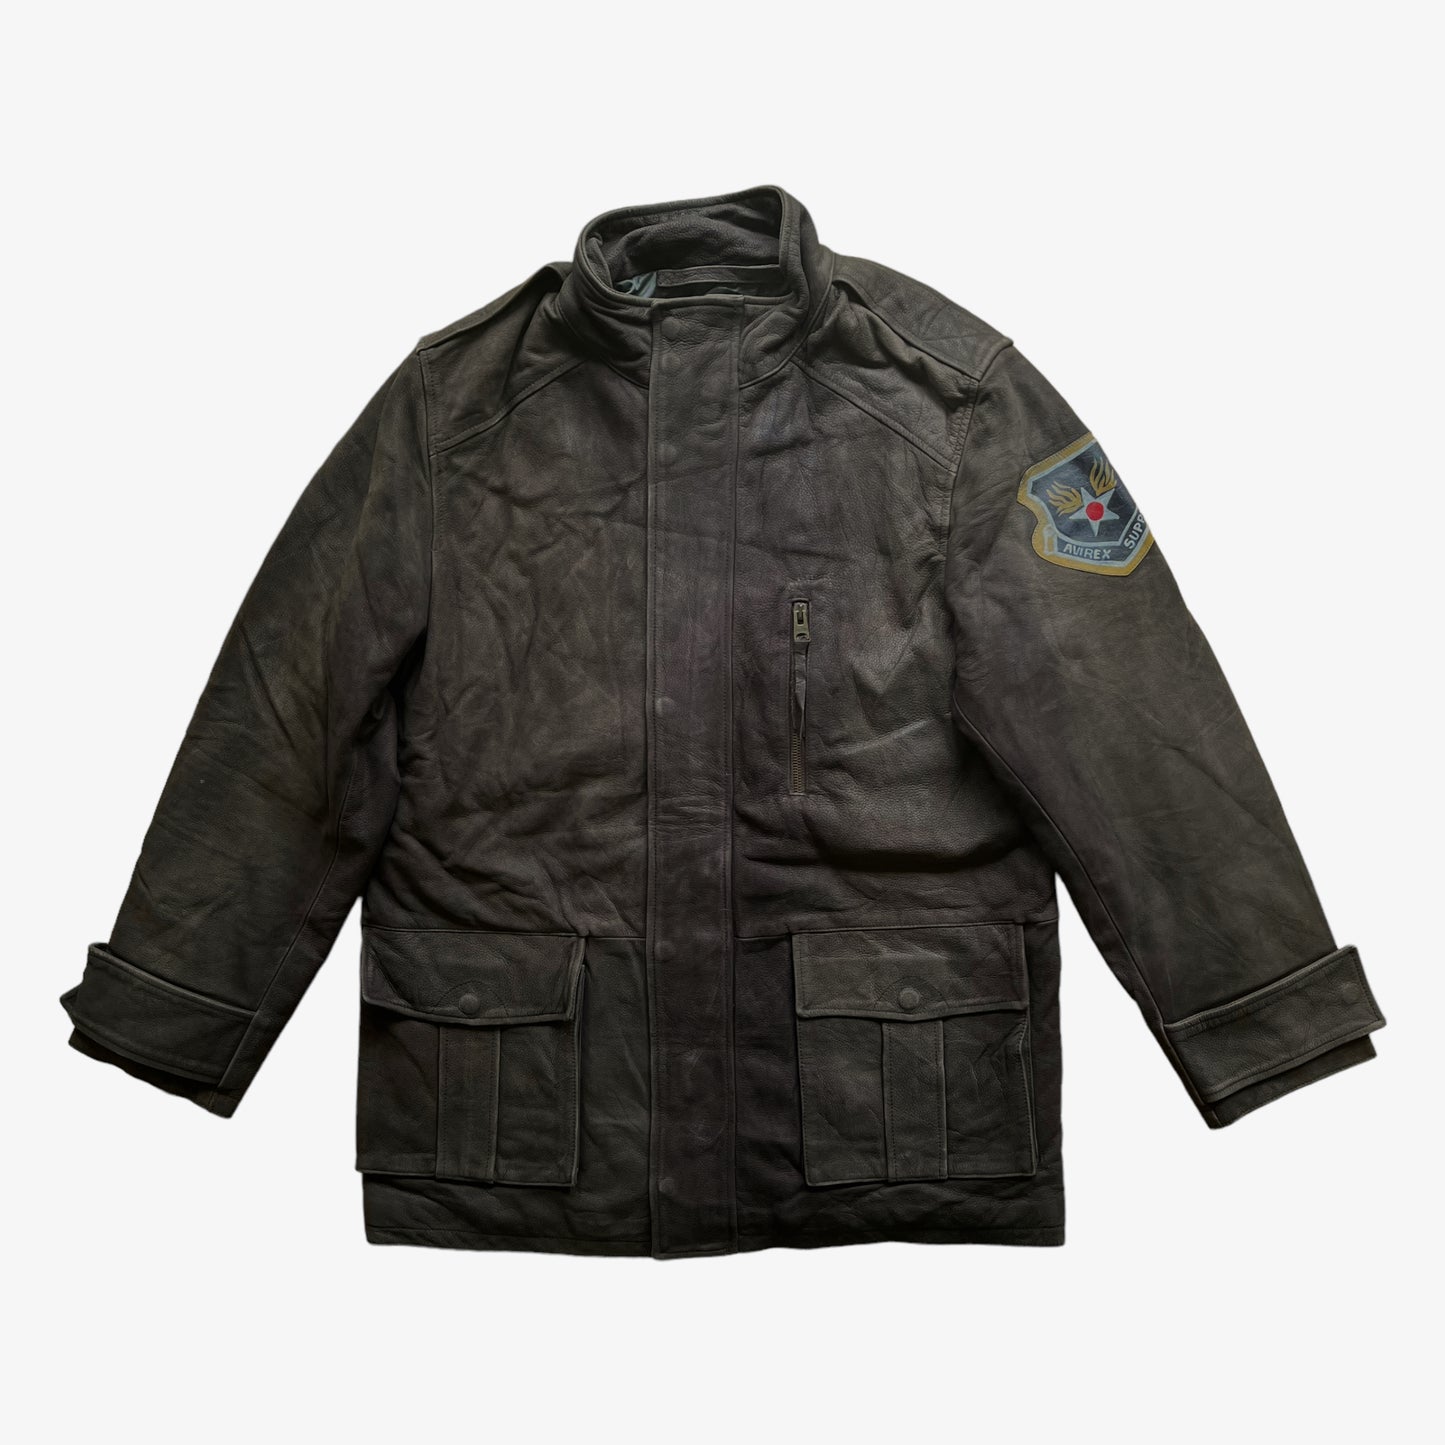 Vintage 90s AVIREX Leather Military Grade Jacket - Casspios Dream